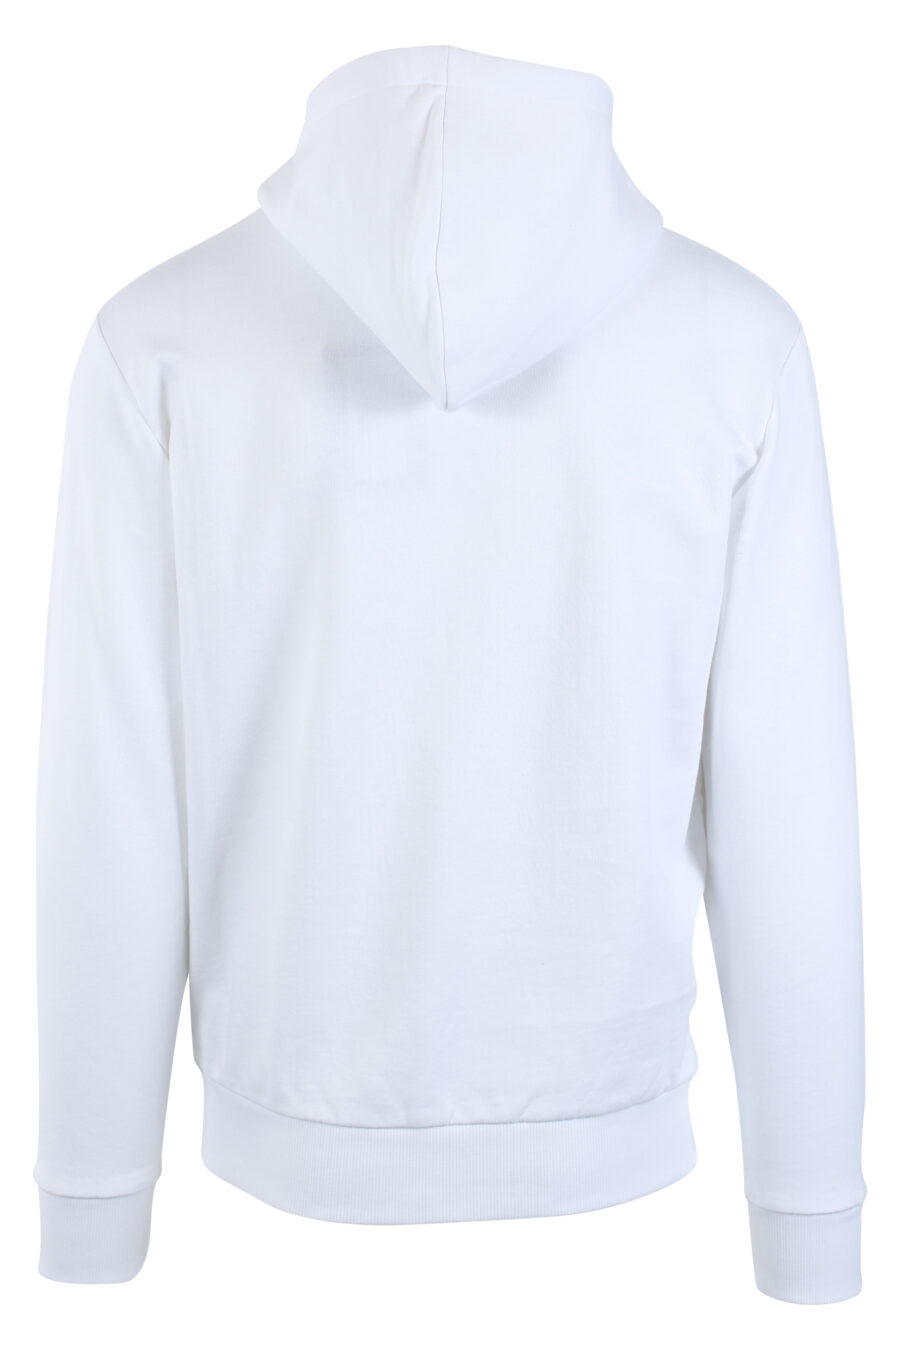 Weißes Kapuzensweatshirt mit schwarzem Maxilogo "paris" - IMG 2603